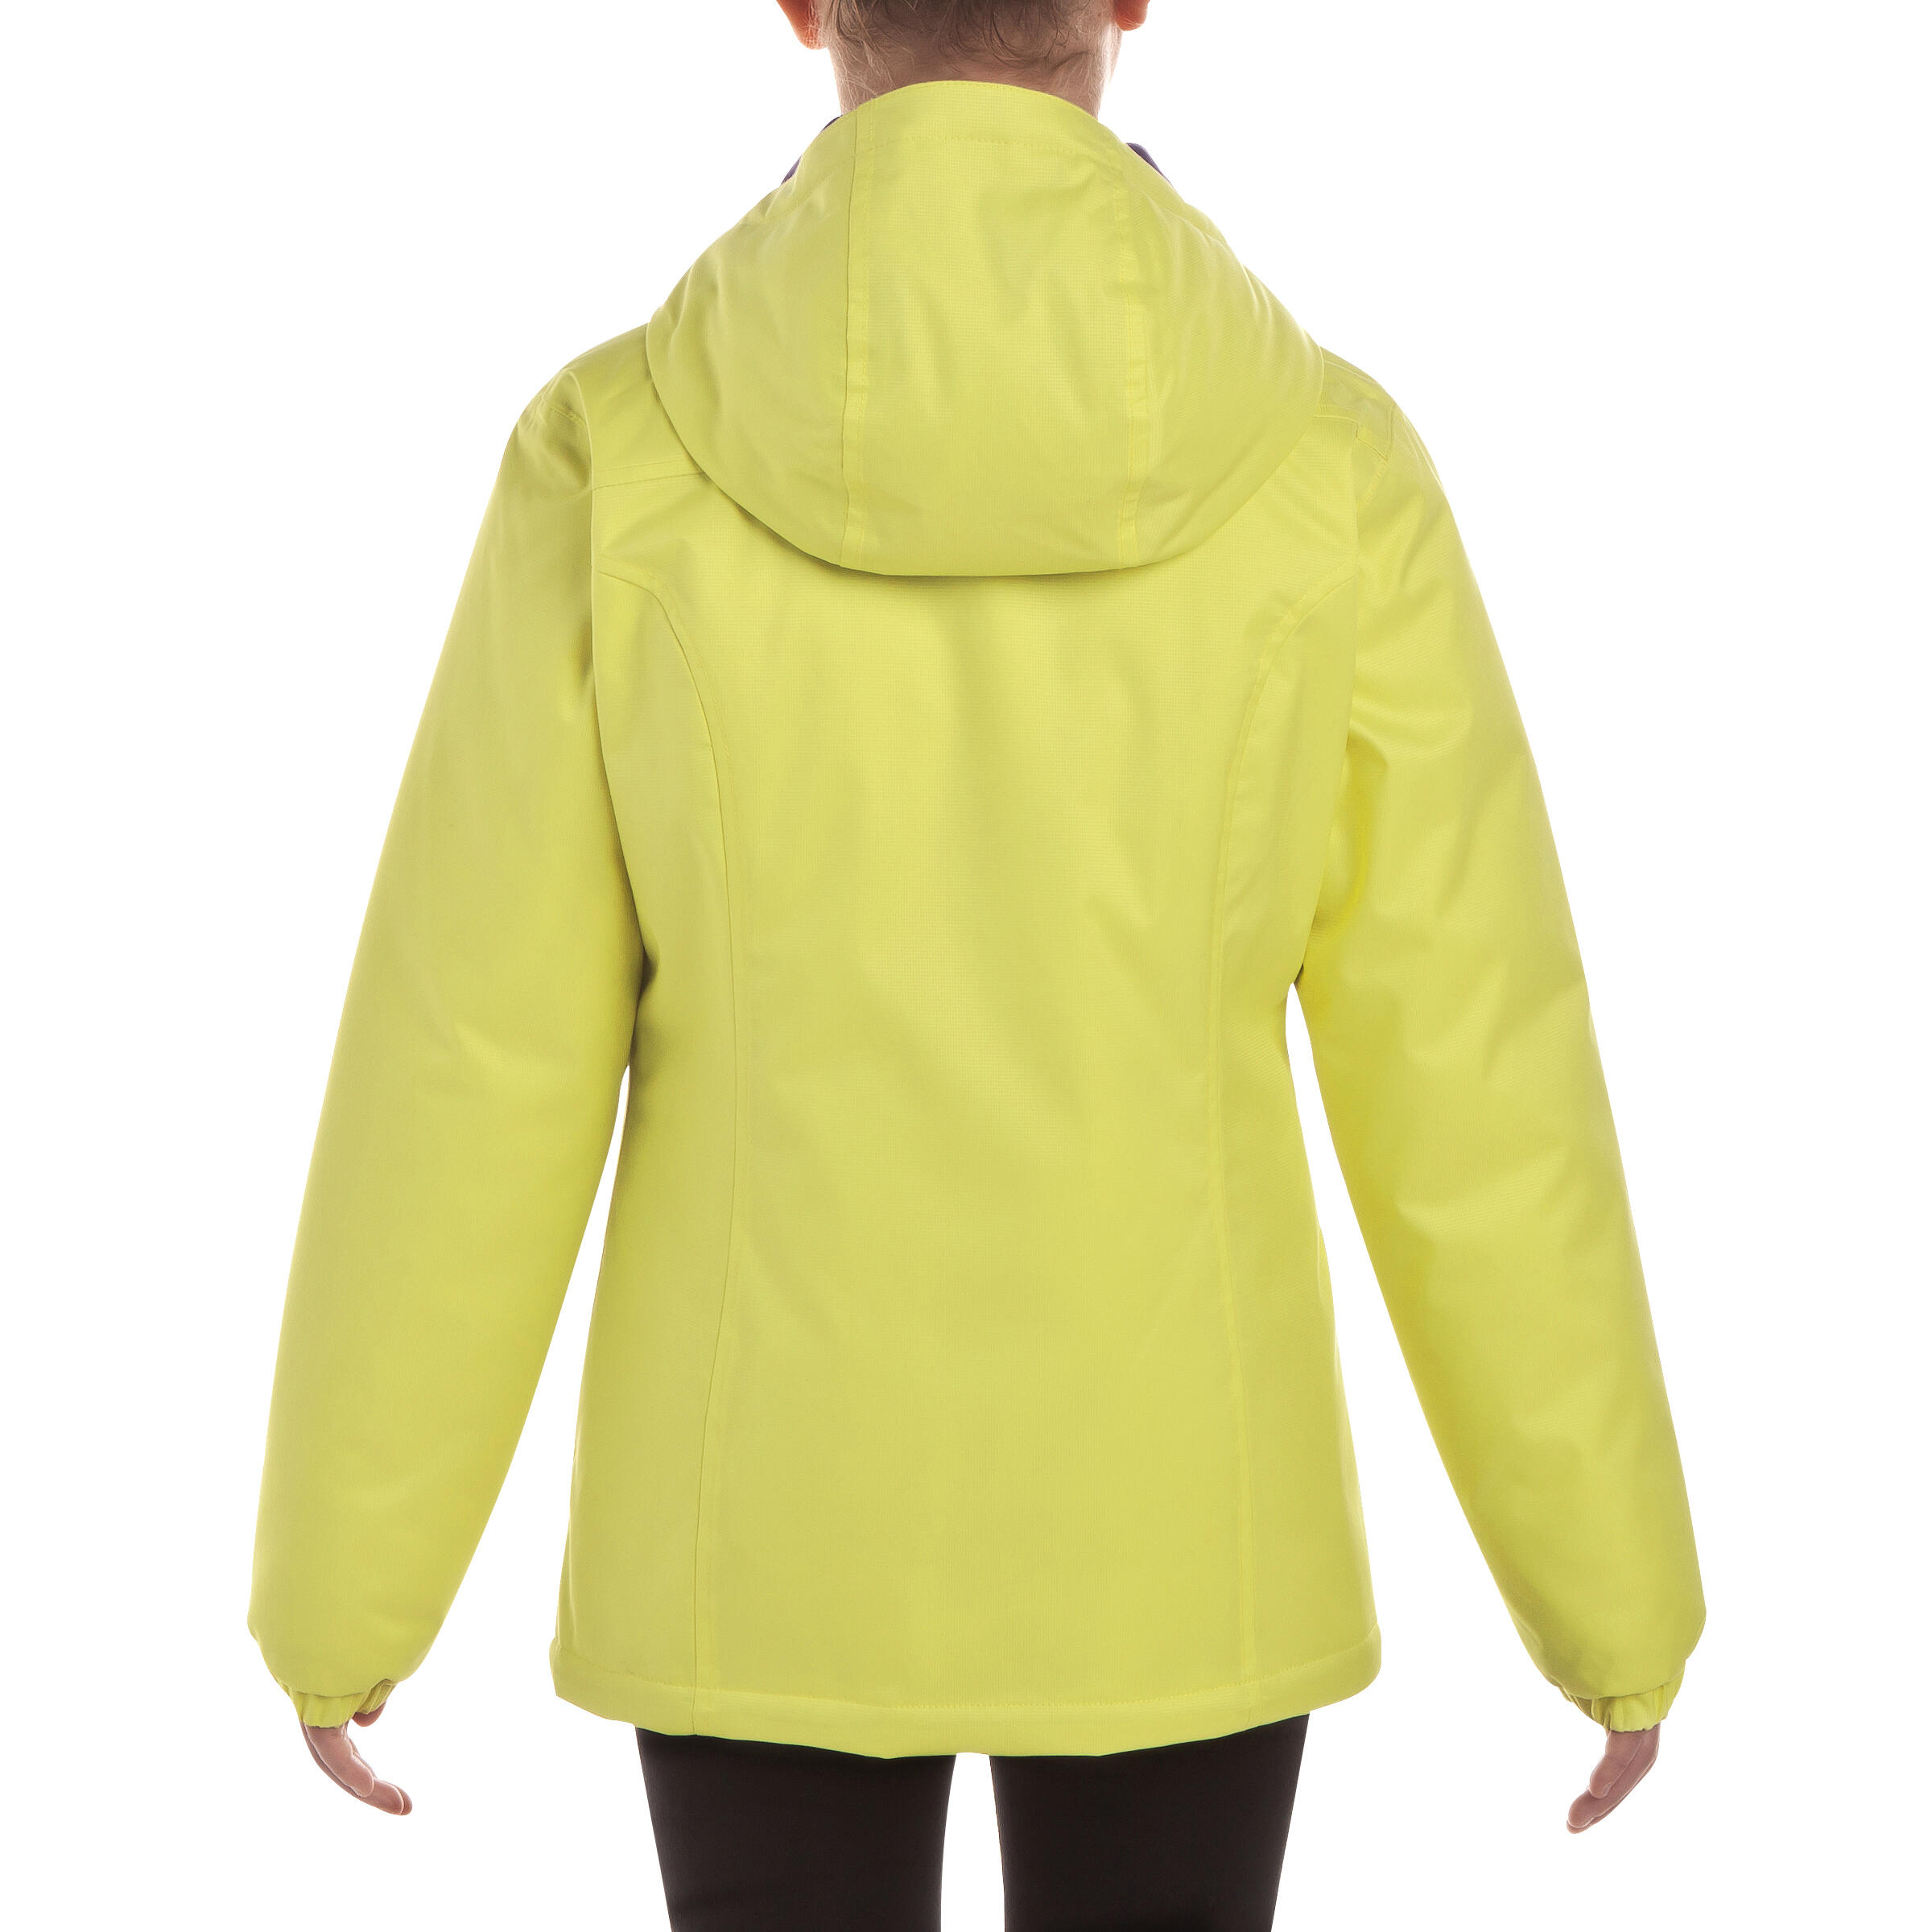 Arpenaz 400 Warm Reversible Girls' Jacket Yellow 10/11